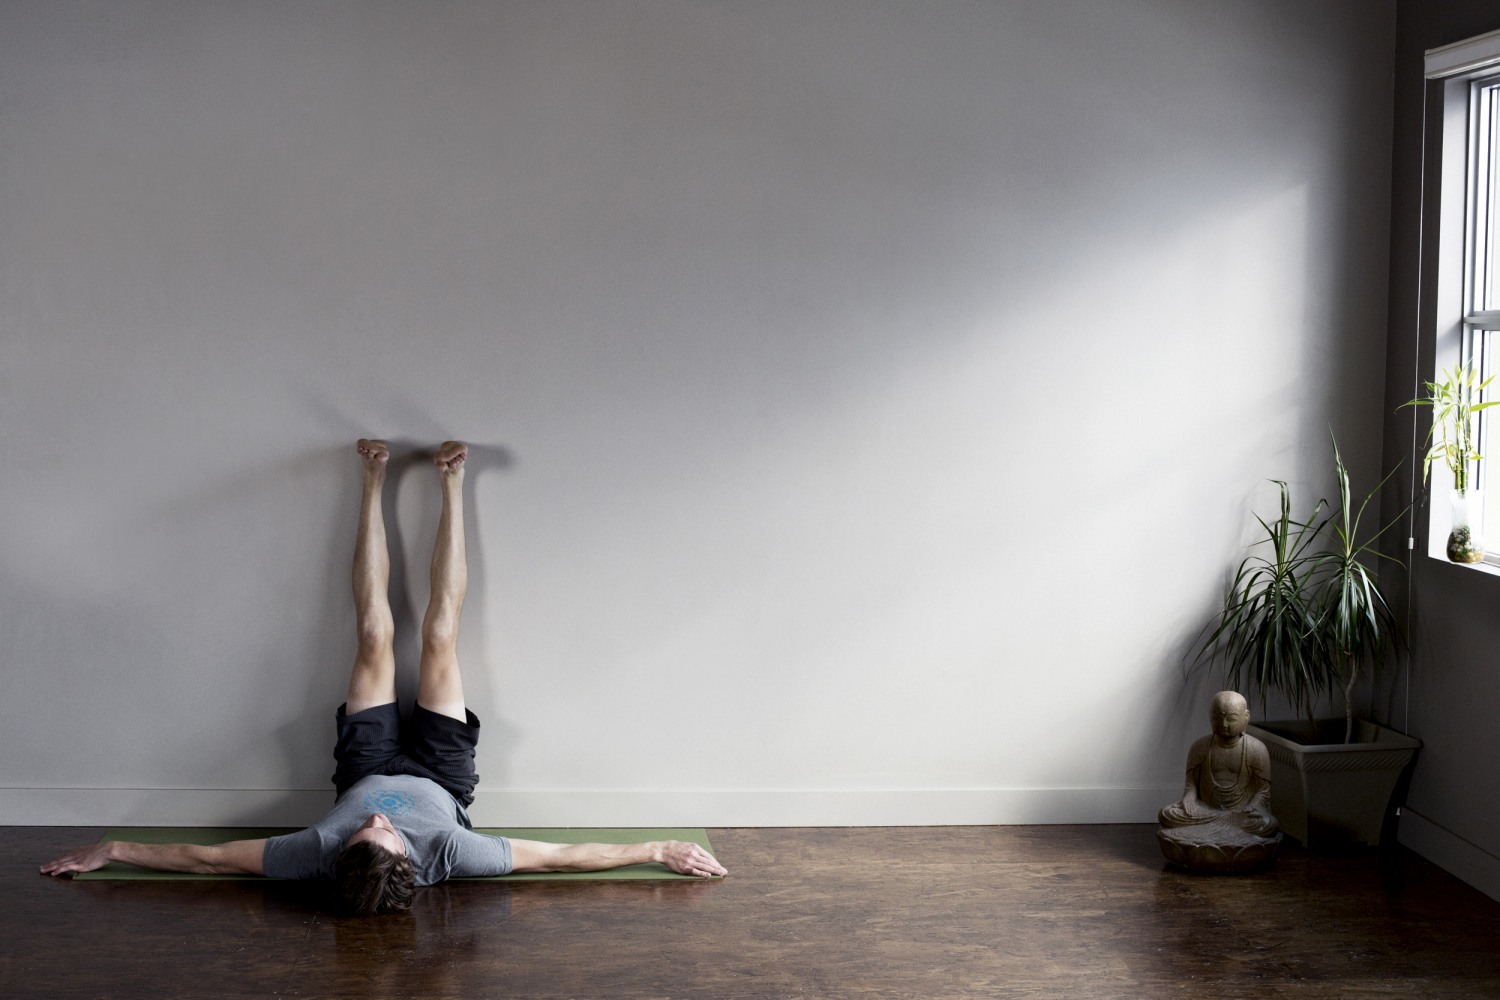 15 min Gentle Yoga for Flexibility & Stress Reduction 